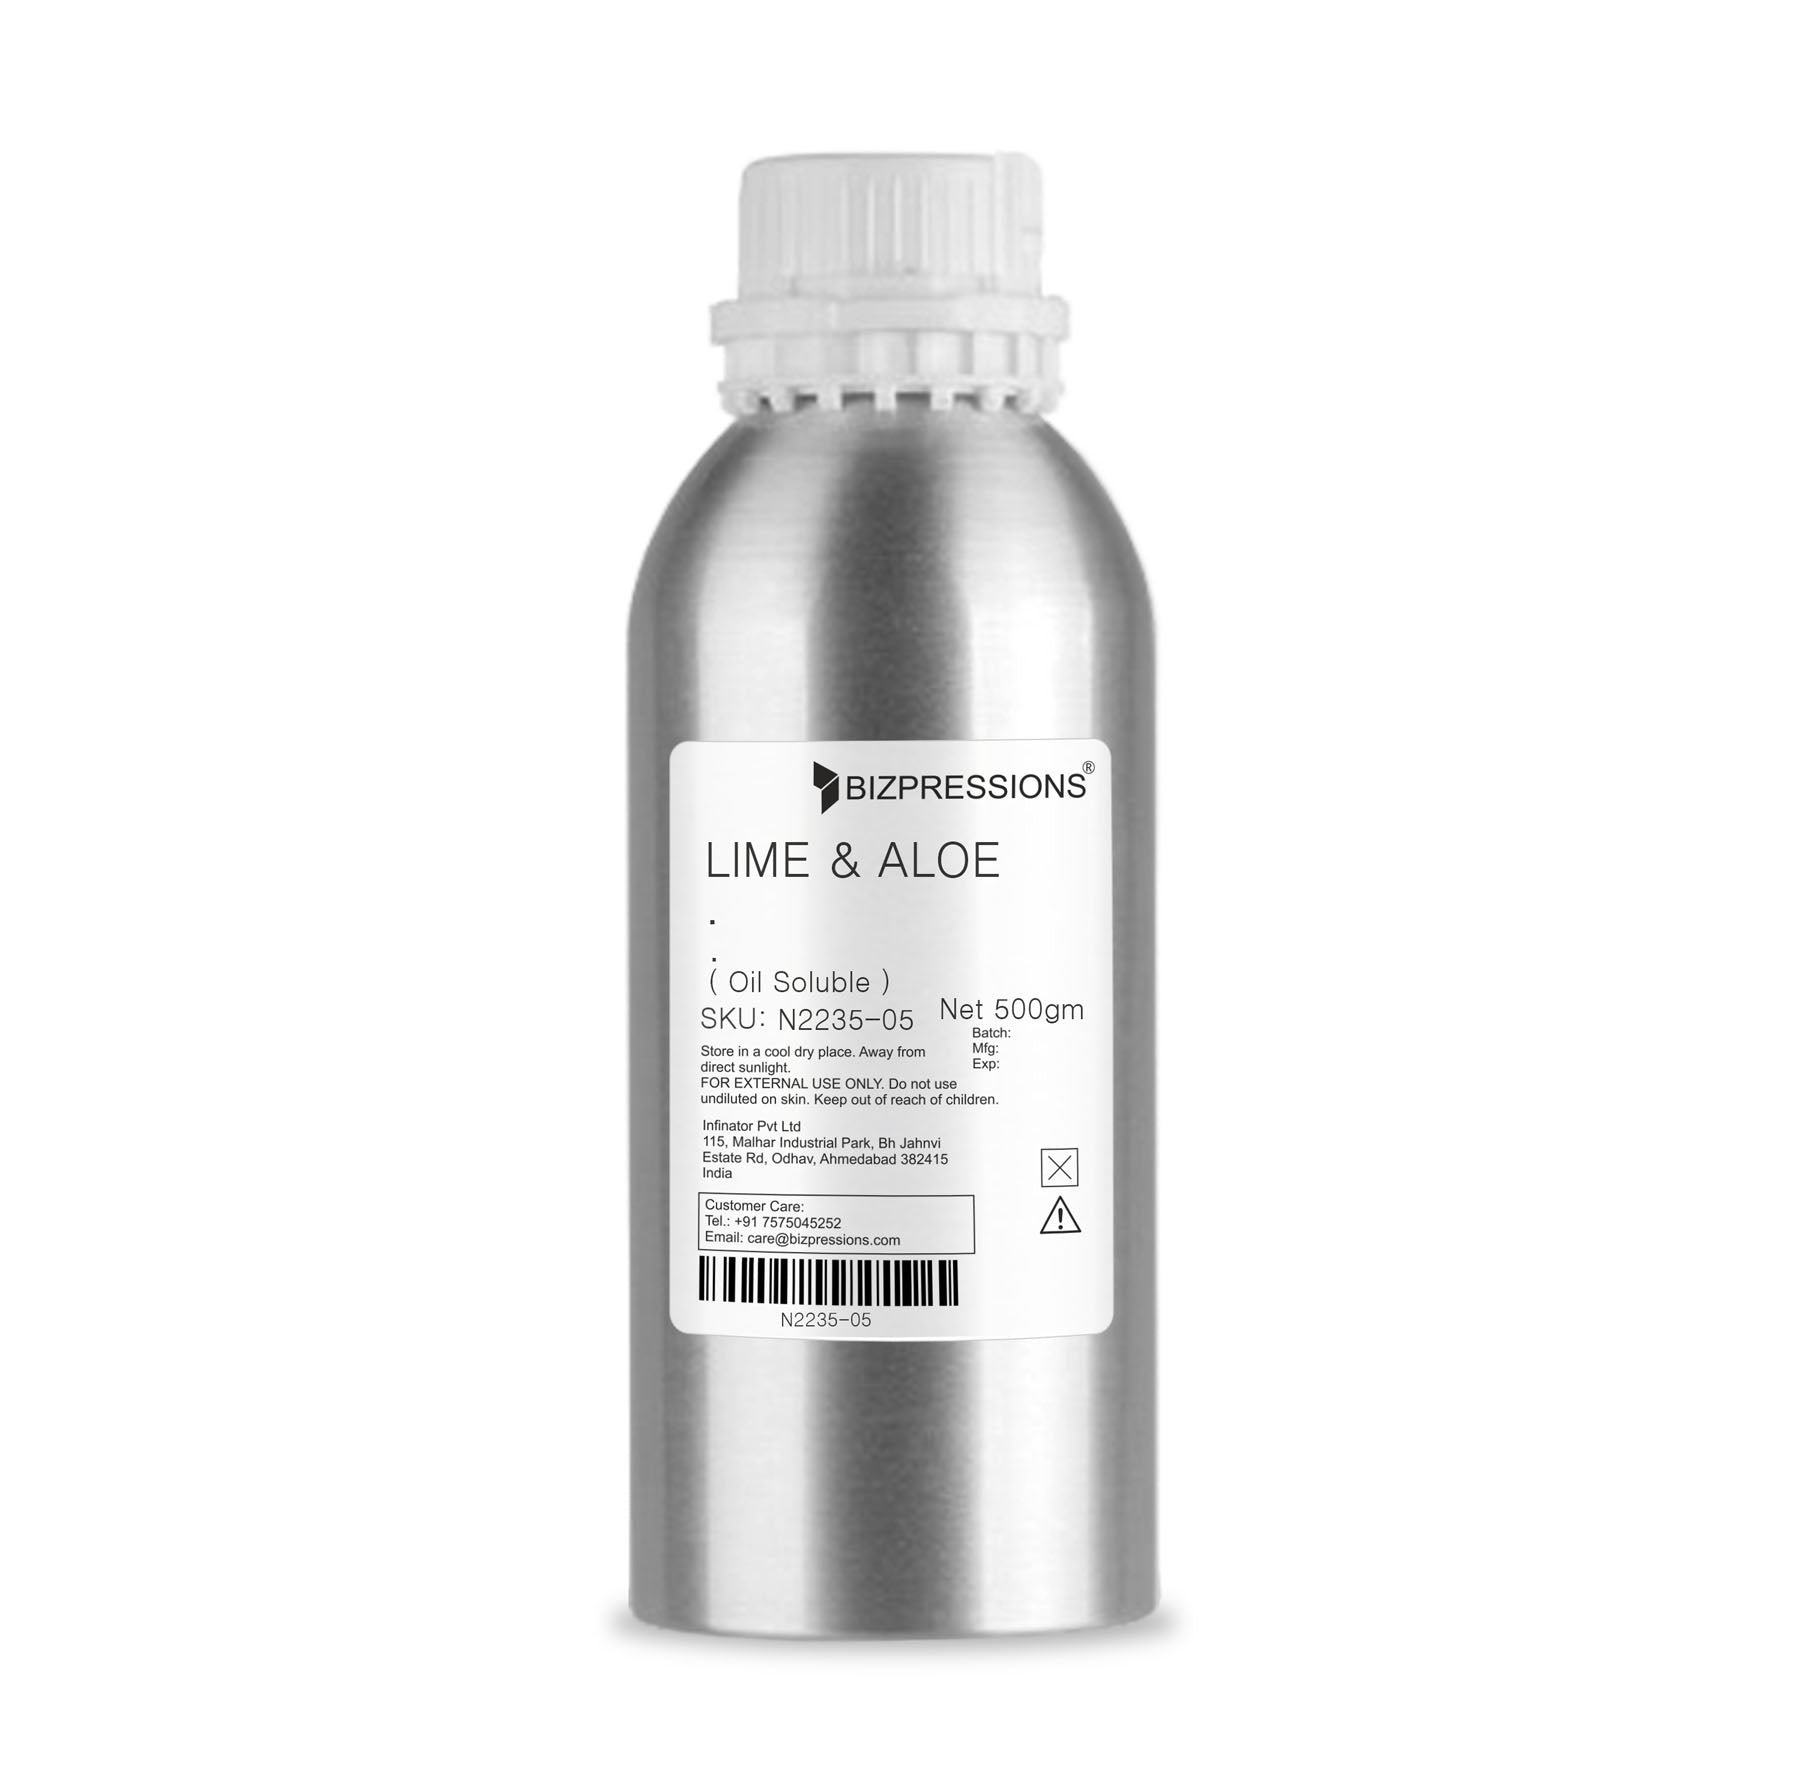 LIME & ALOE - Fragrance ( Oil Soluble ) - 500 gm